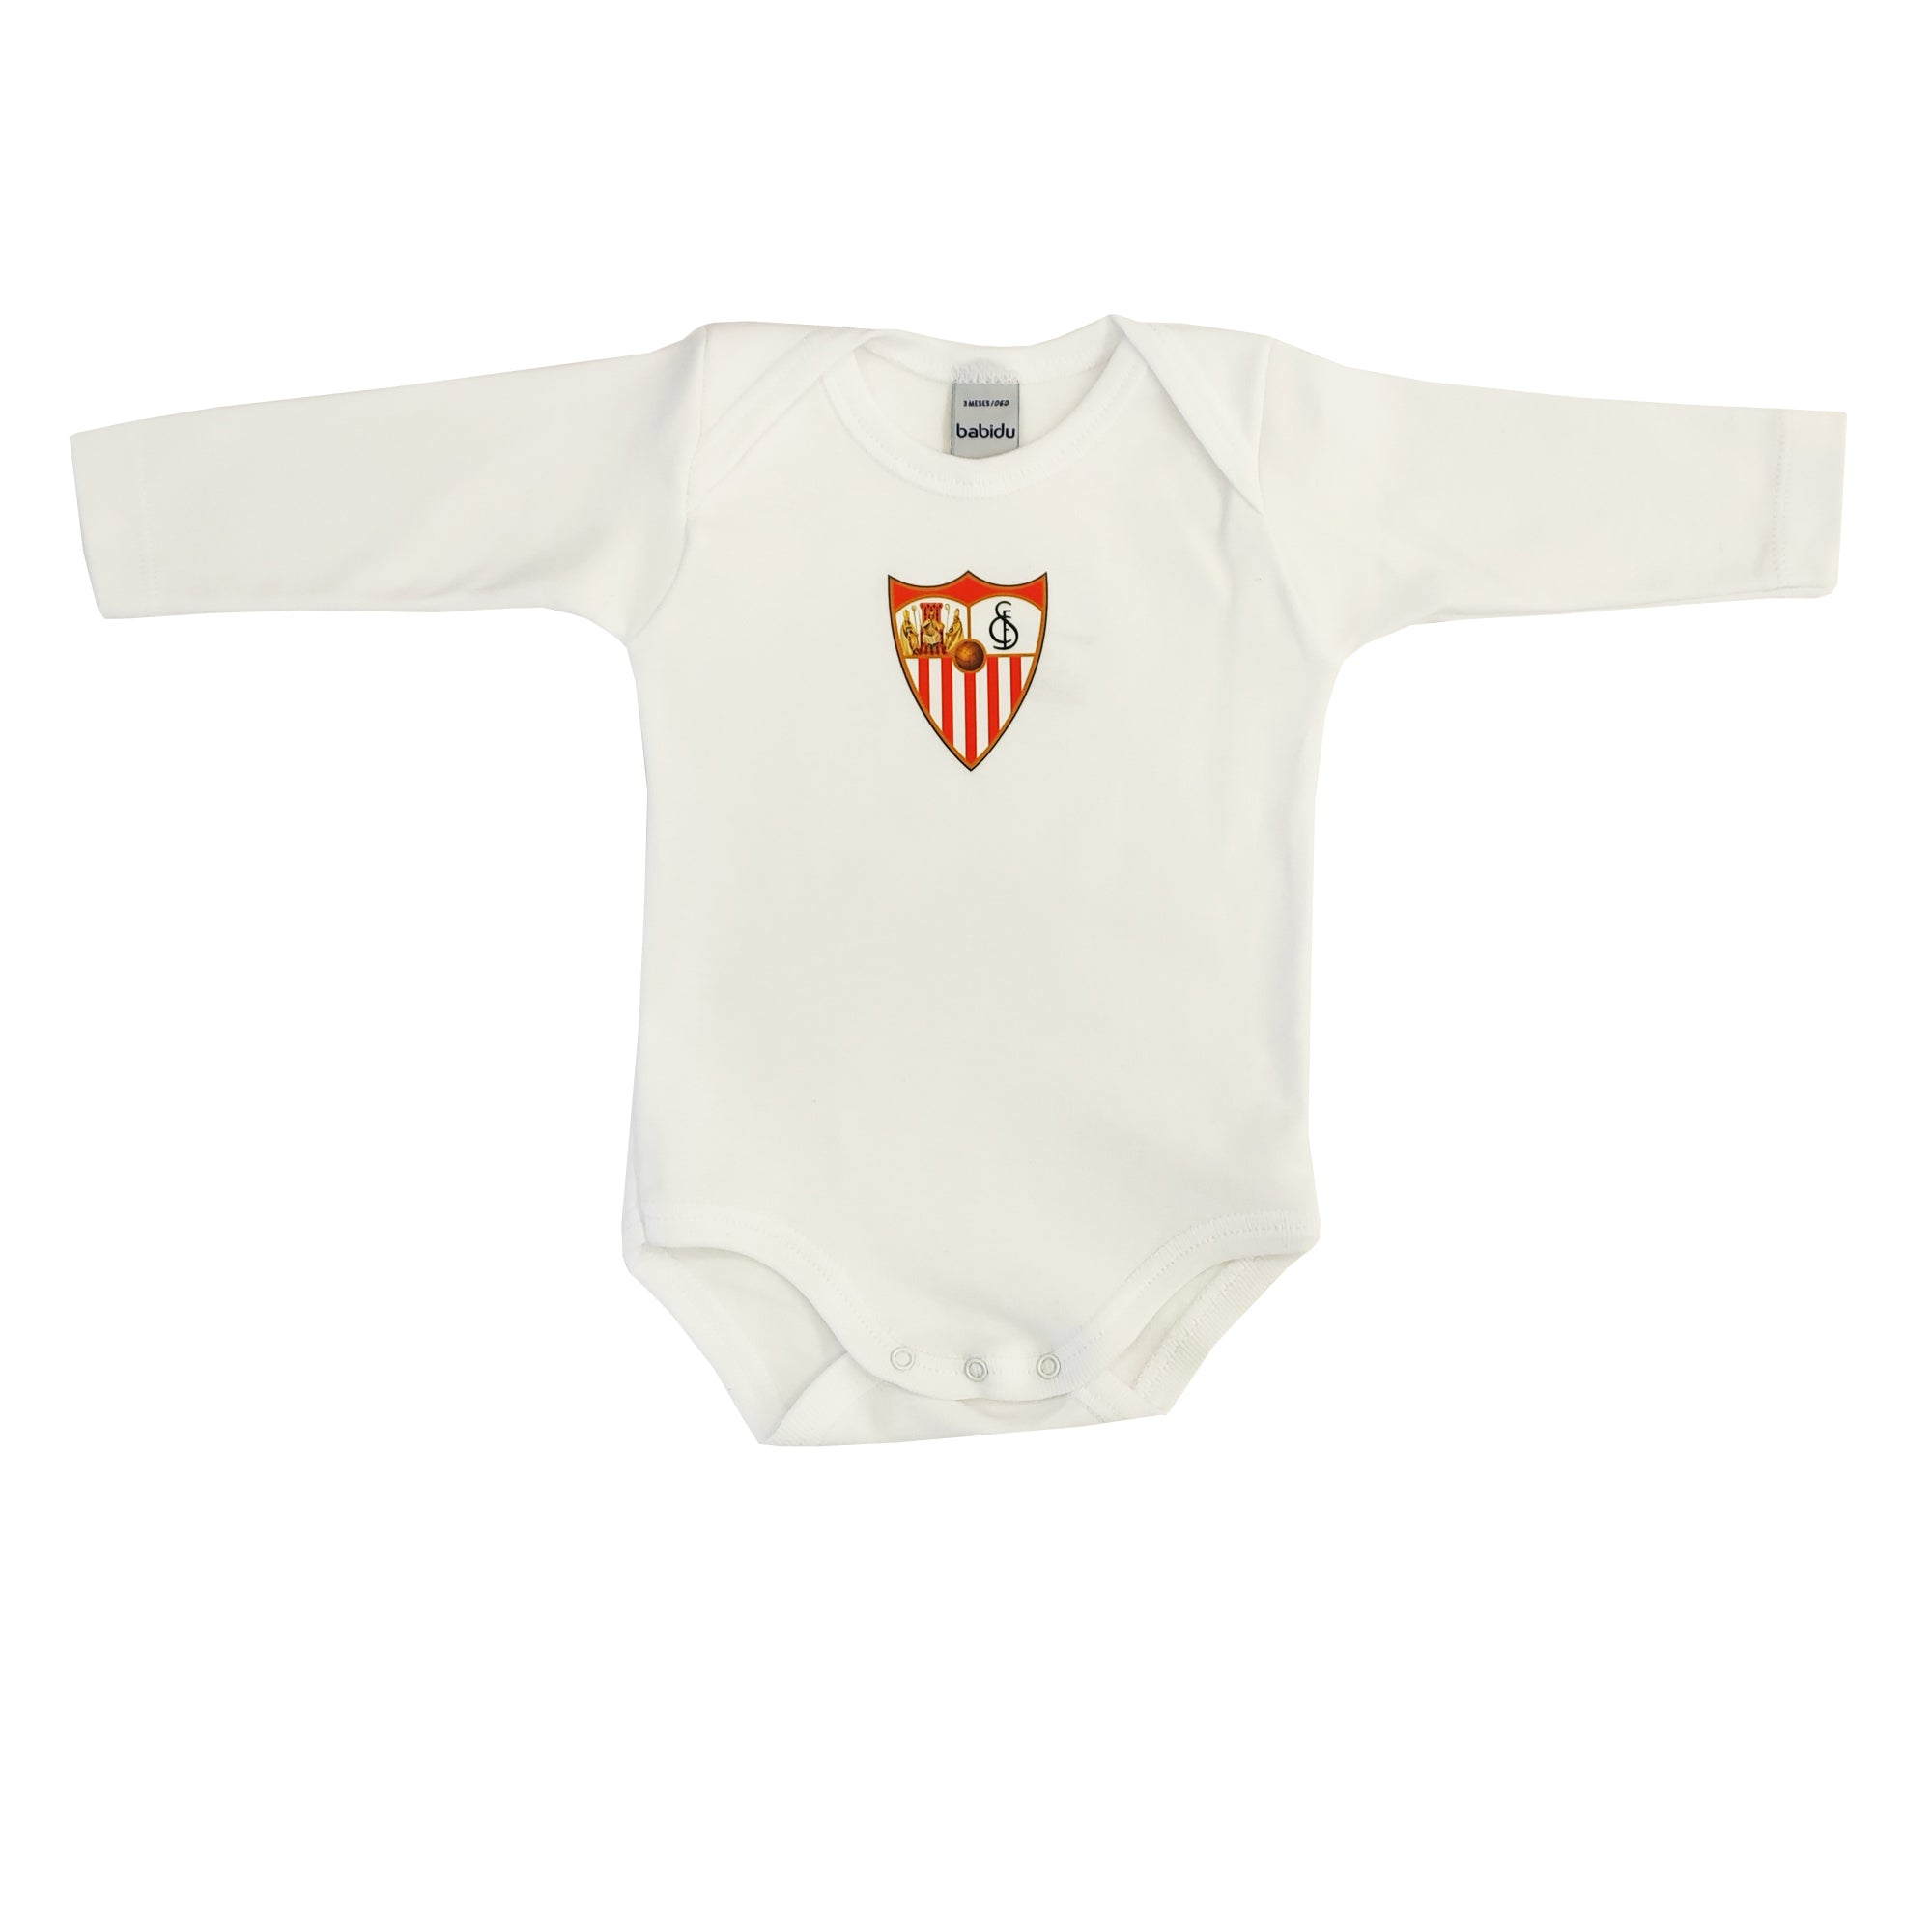 White Baby Bodysuit with Crest